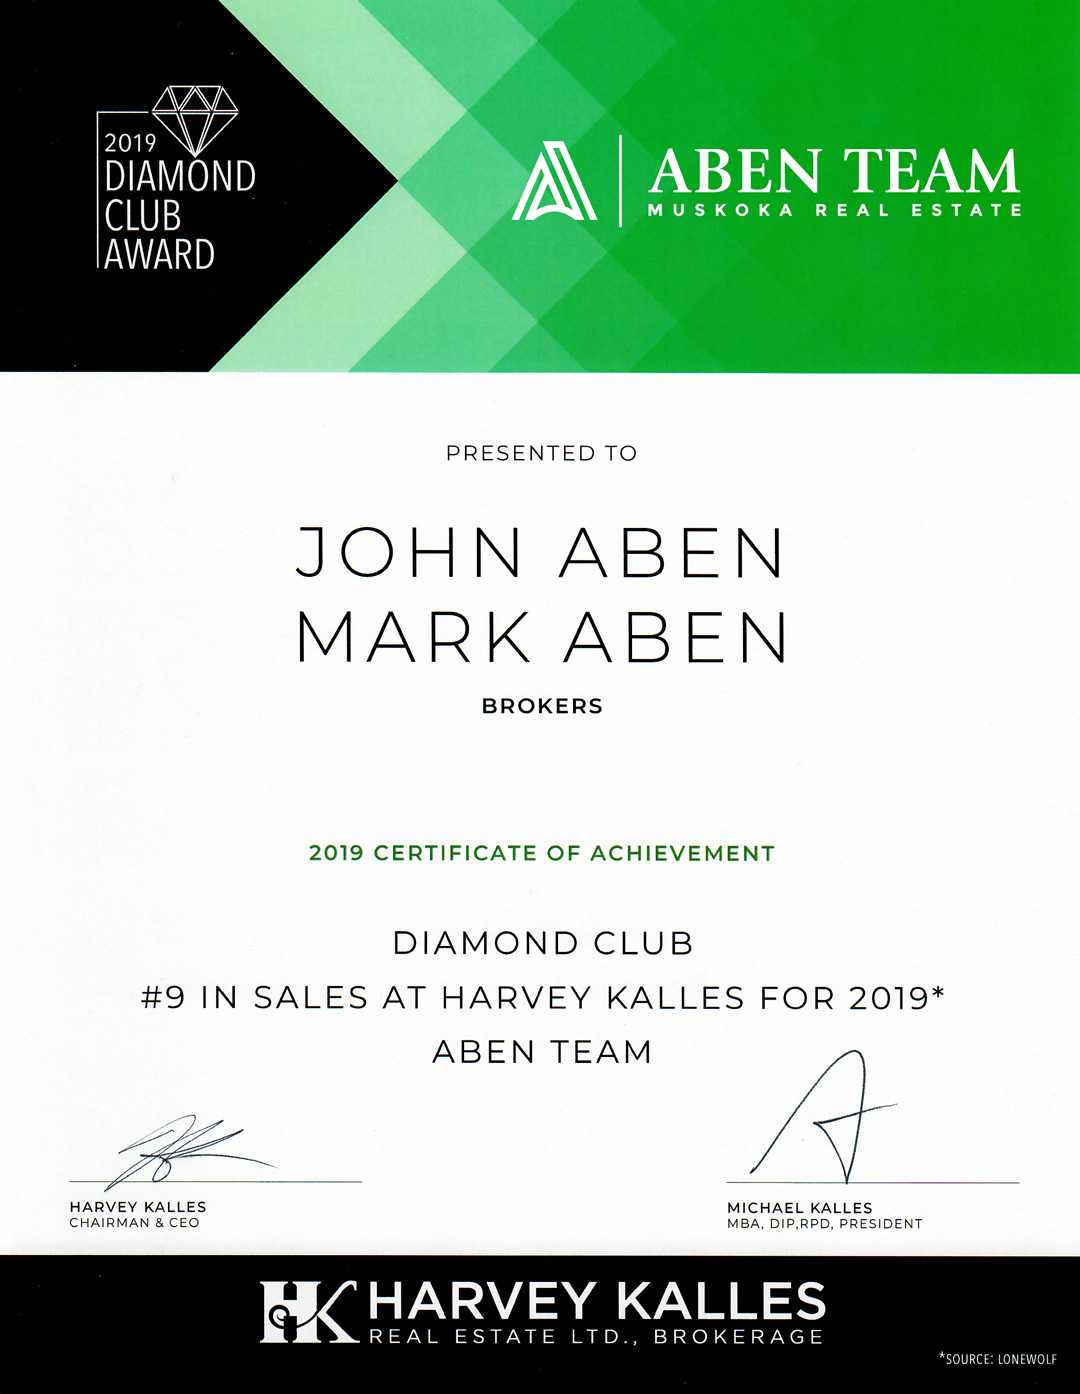 Harvey Kalles Real Estate - Aben Team